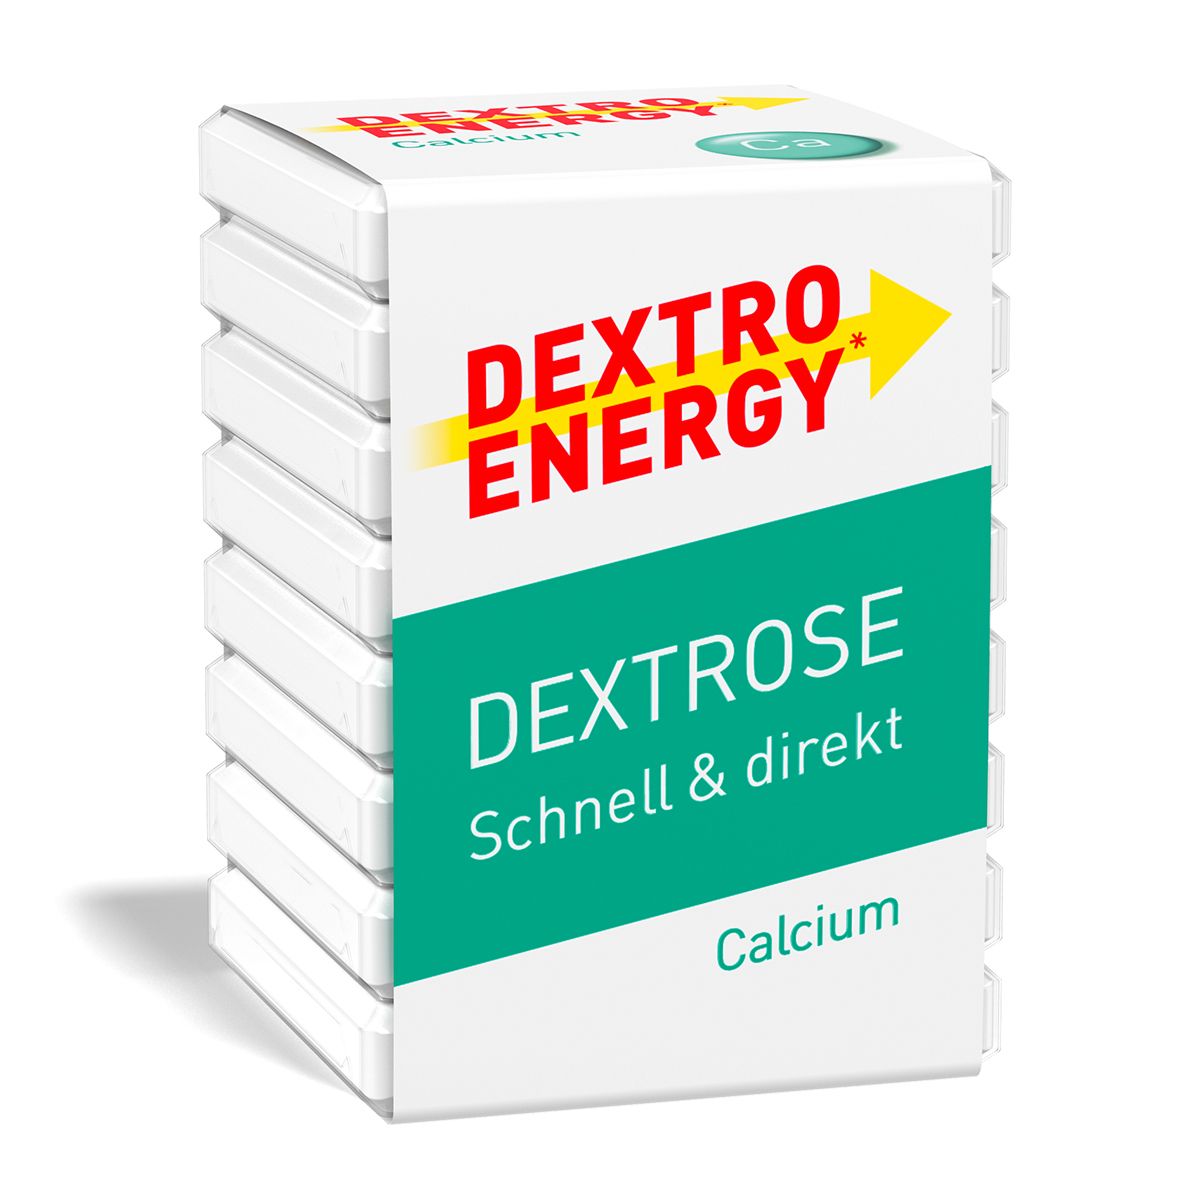 Dextro Energy Calcium Würfel